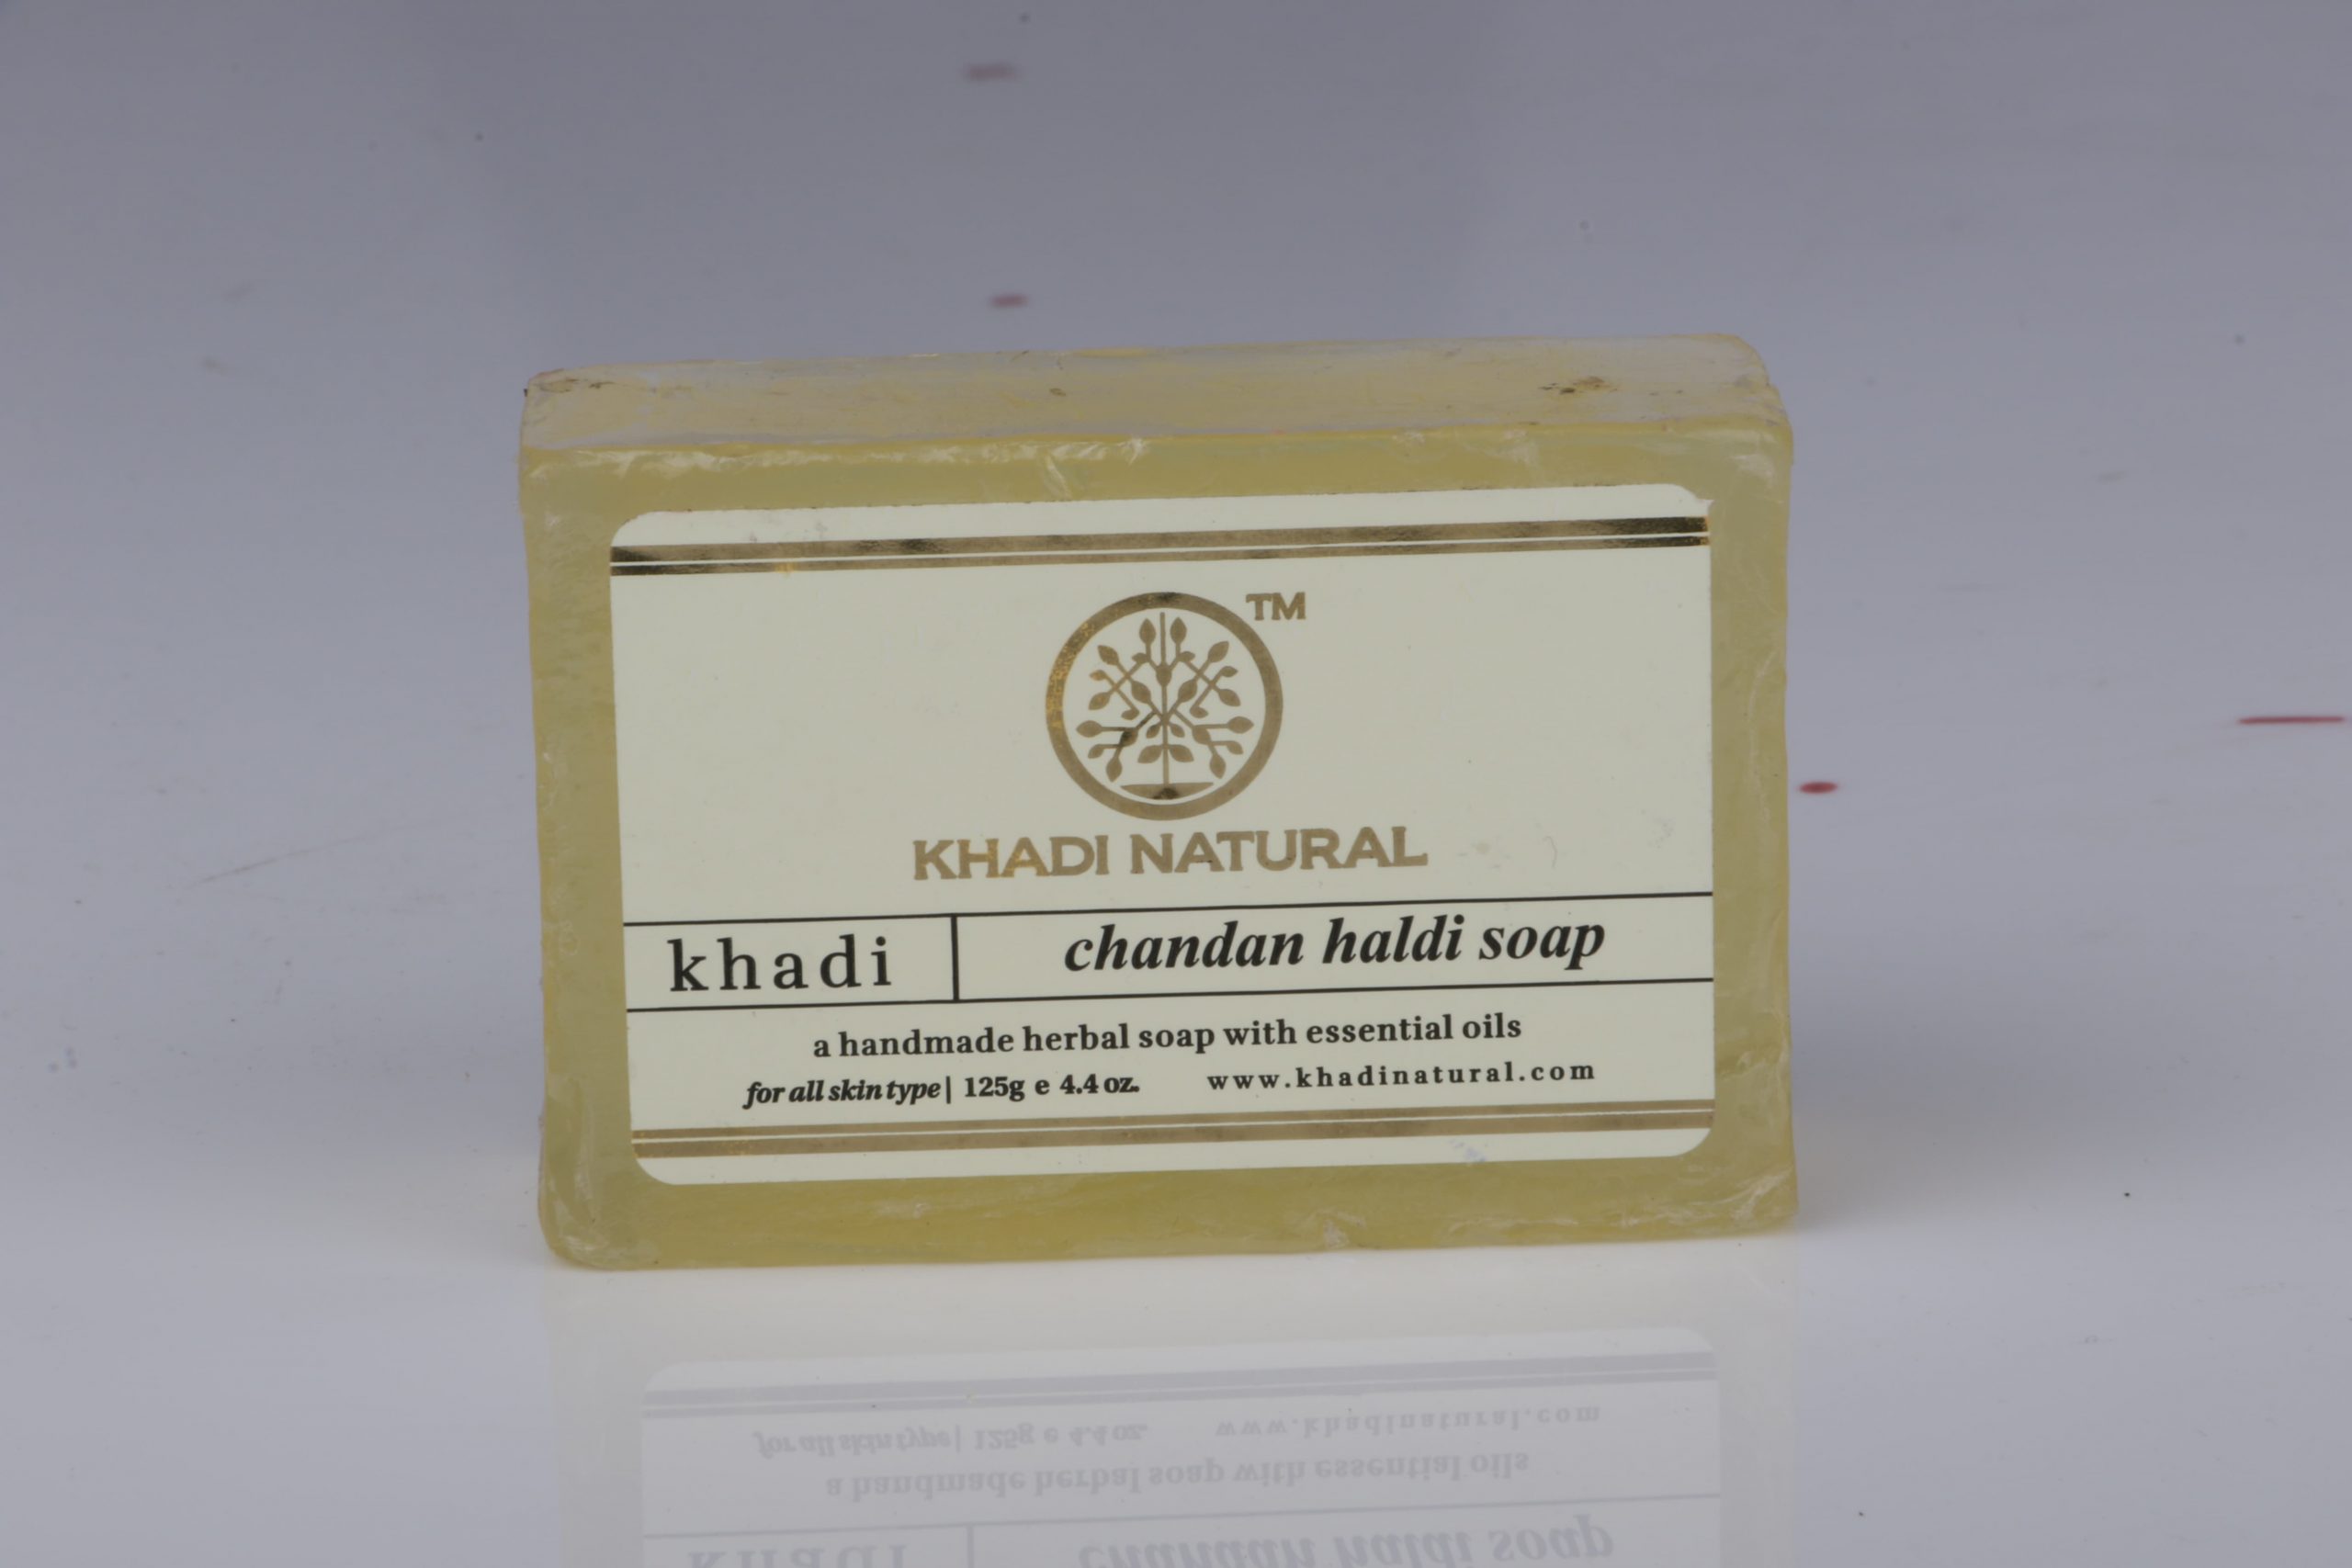 KHADI NATURAL CHANDAN HALDI SOAP